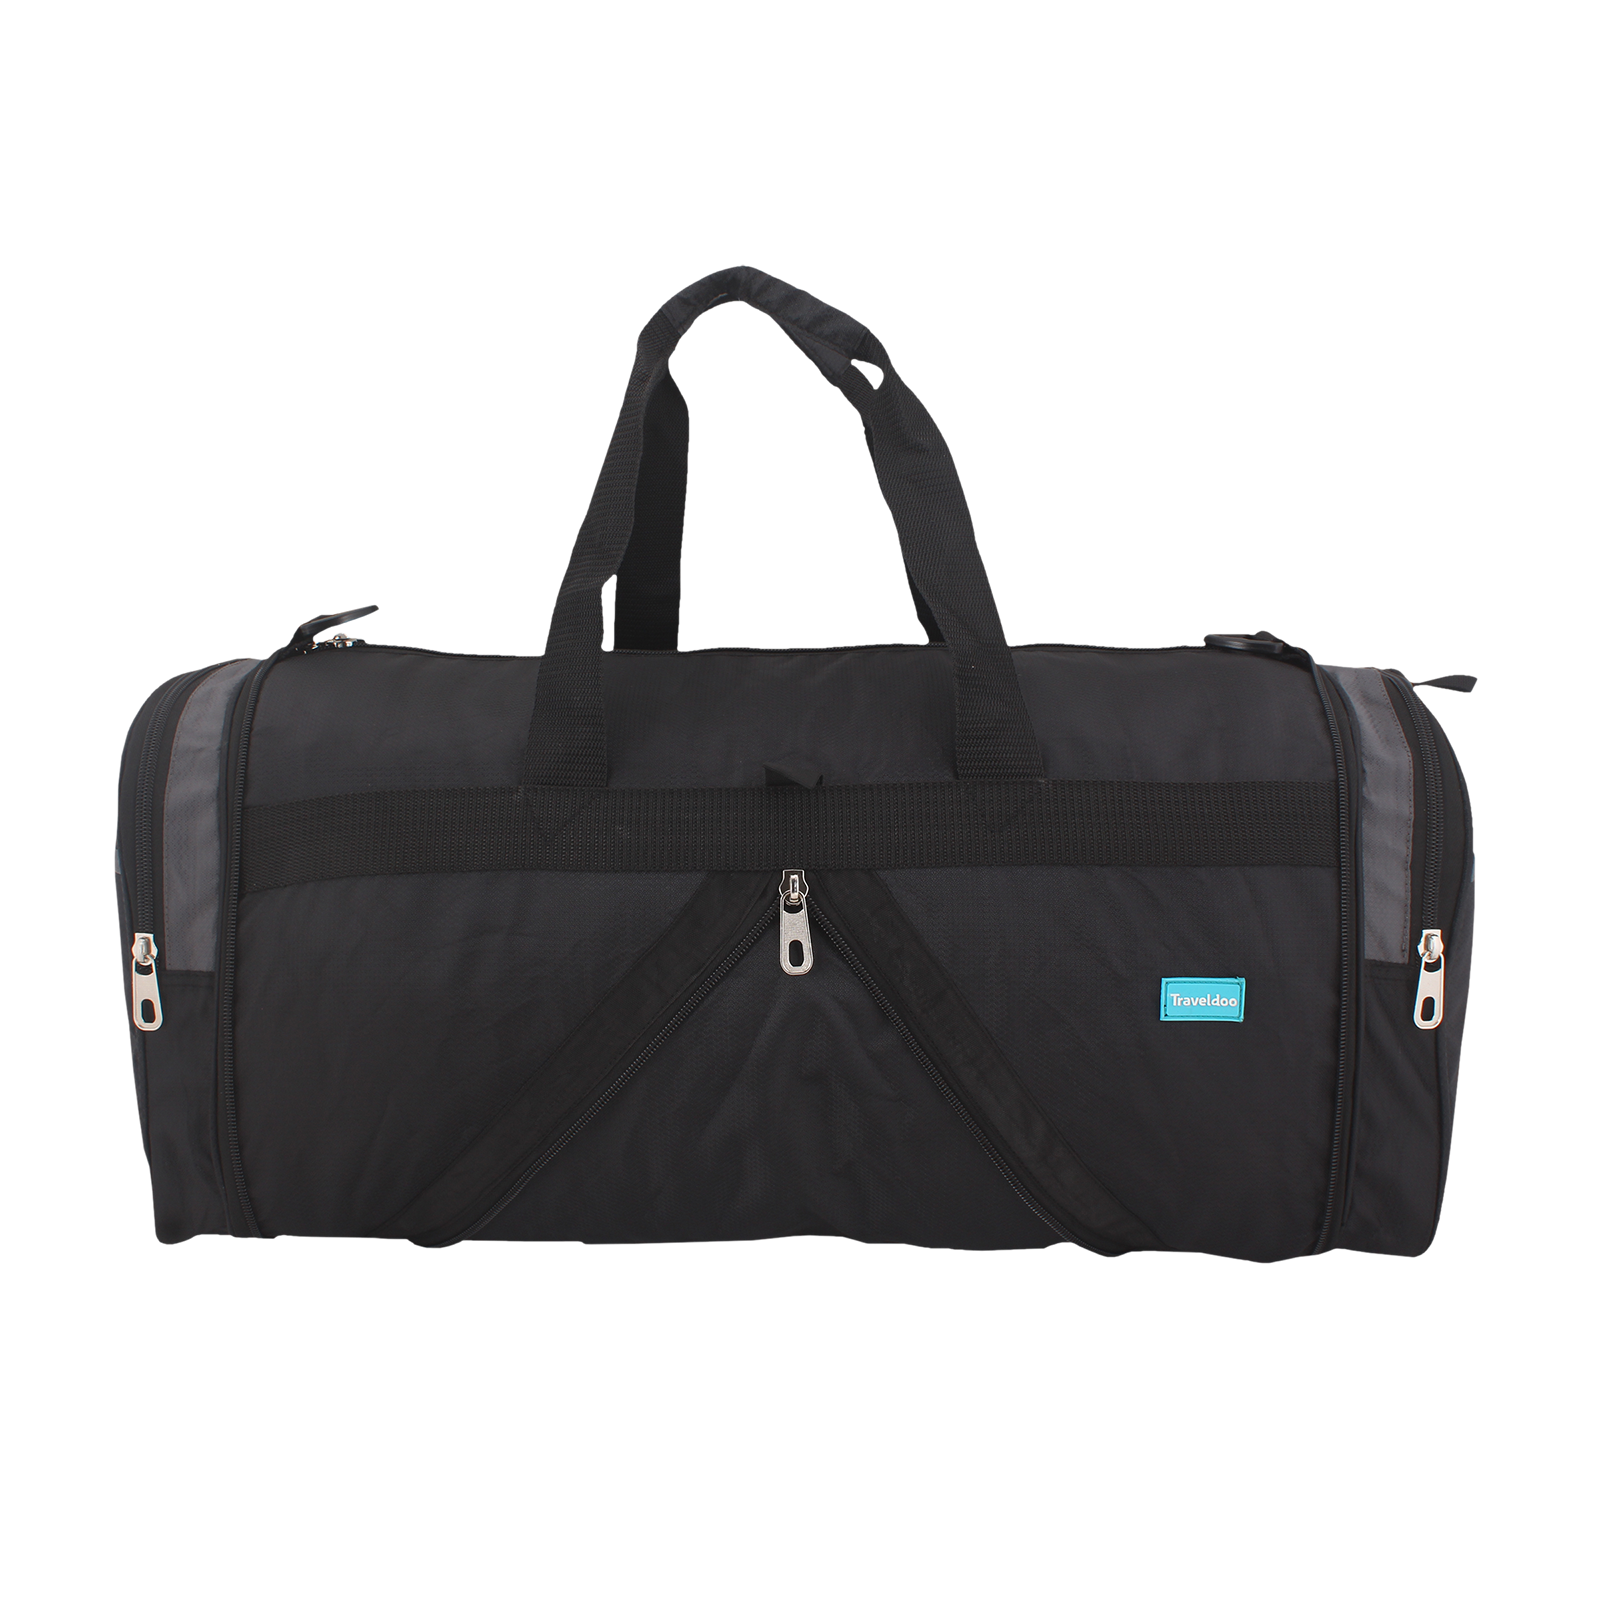 Traveldoo 18 inch Square Folding Duffle Bag (Water Proof, DB0100, Black)